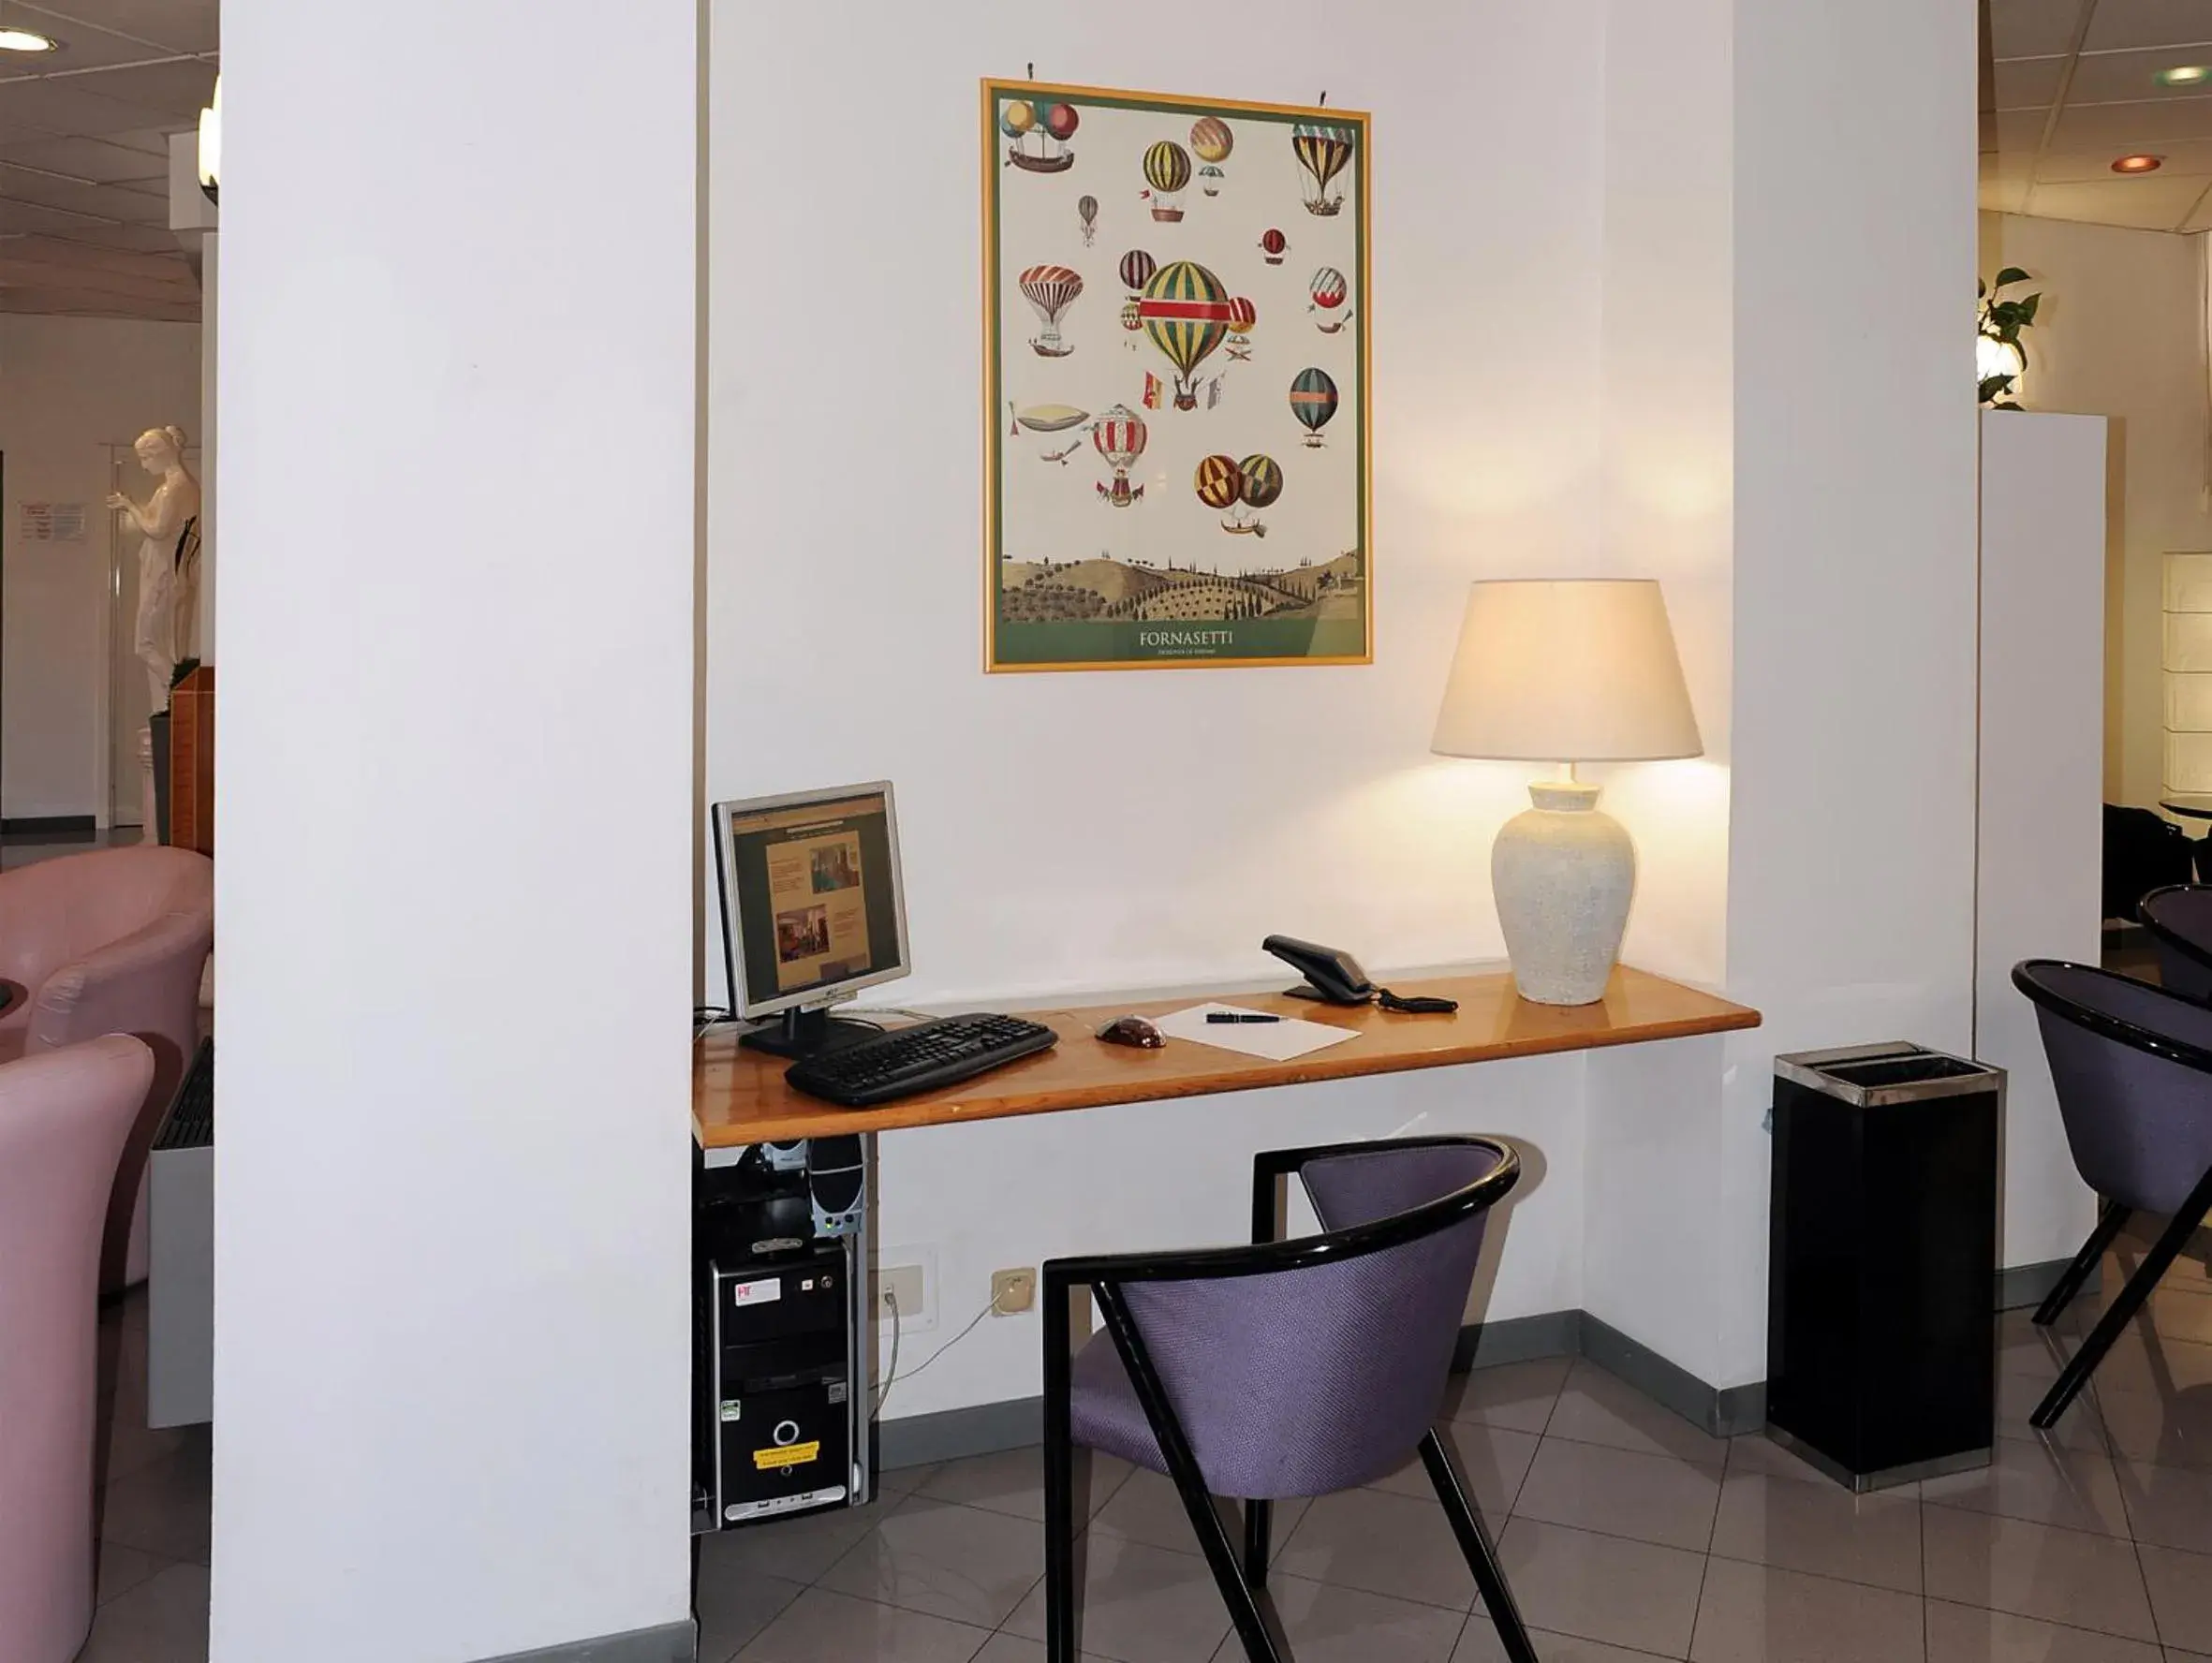 Area and facilities in Tuscia Hotel